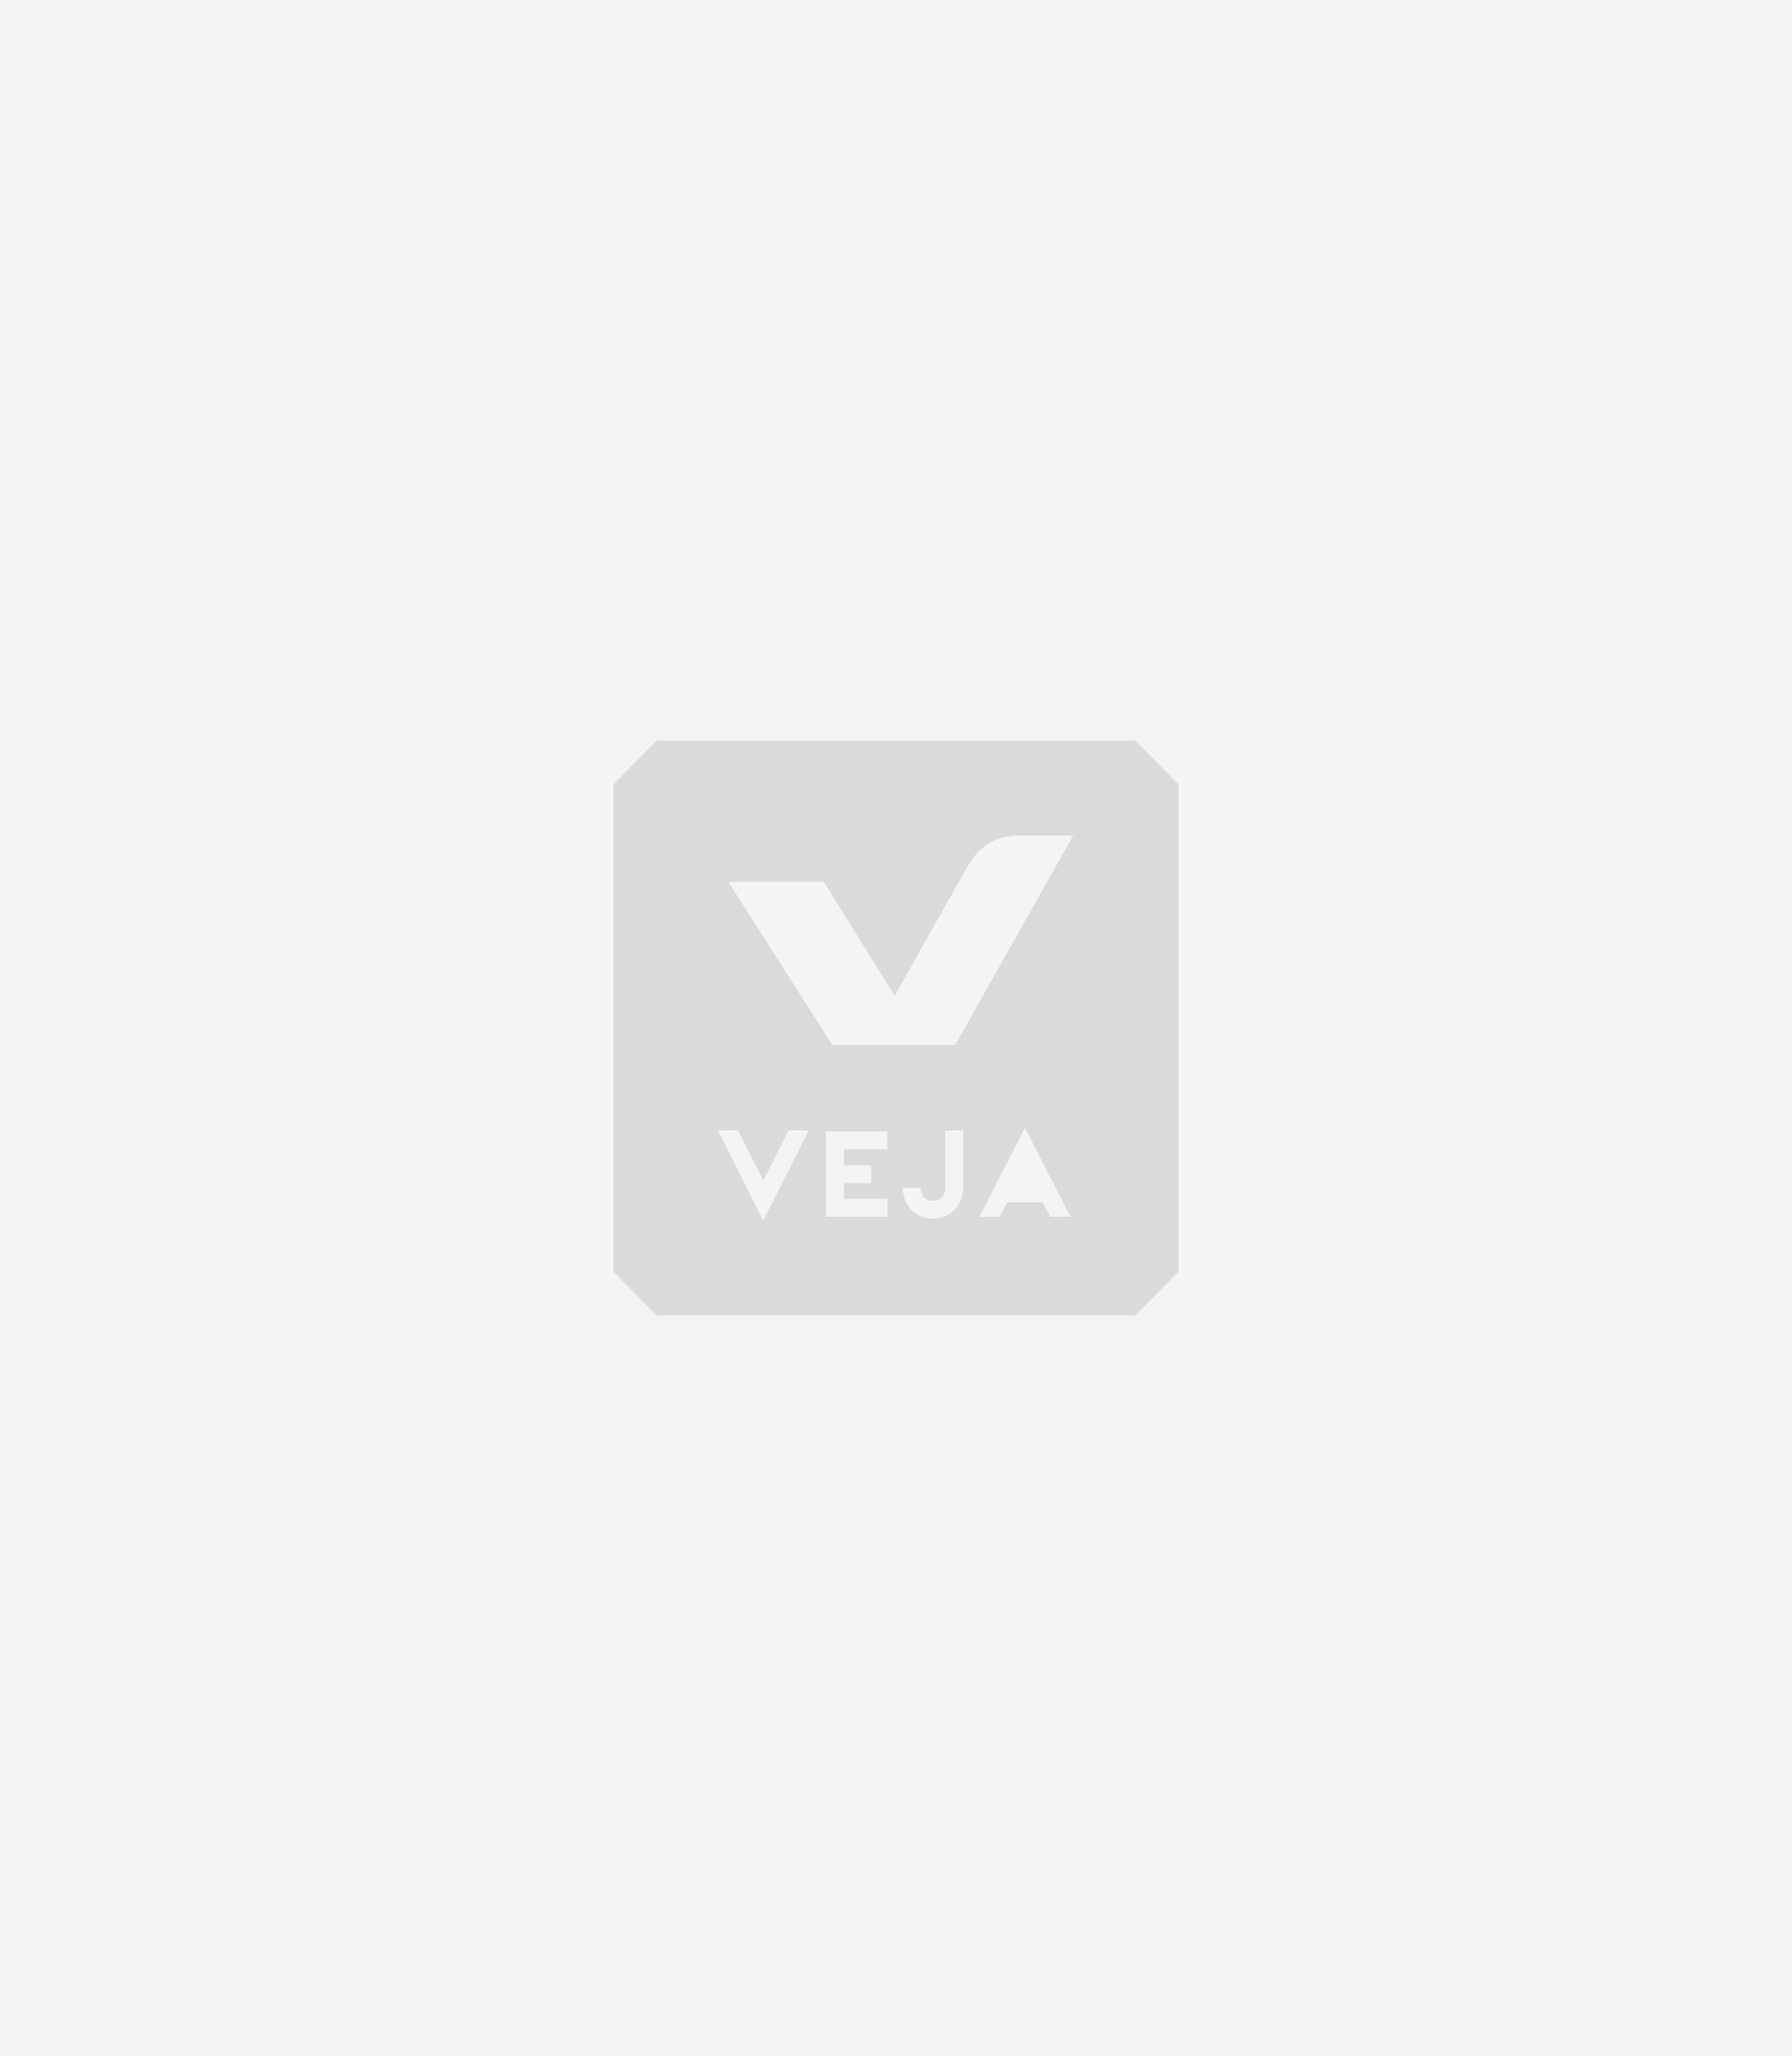 sneaker brand with v logo